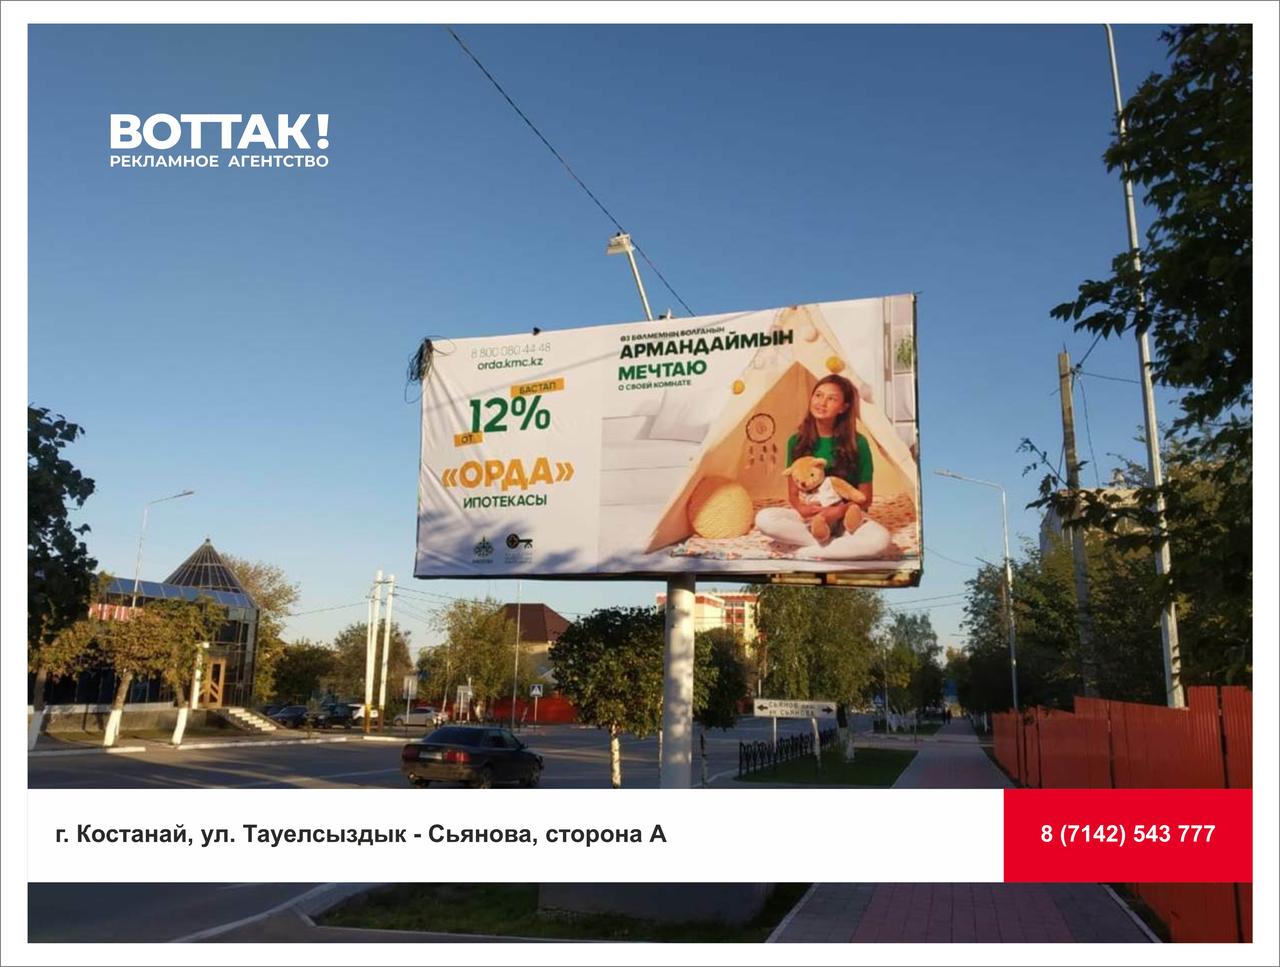 Аренда билборда г. Костанай, ул. Тауелсыздык - Сьянова, сторона А